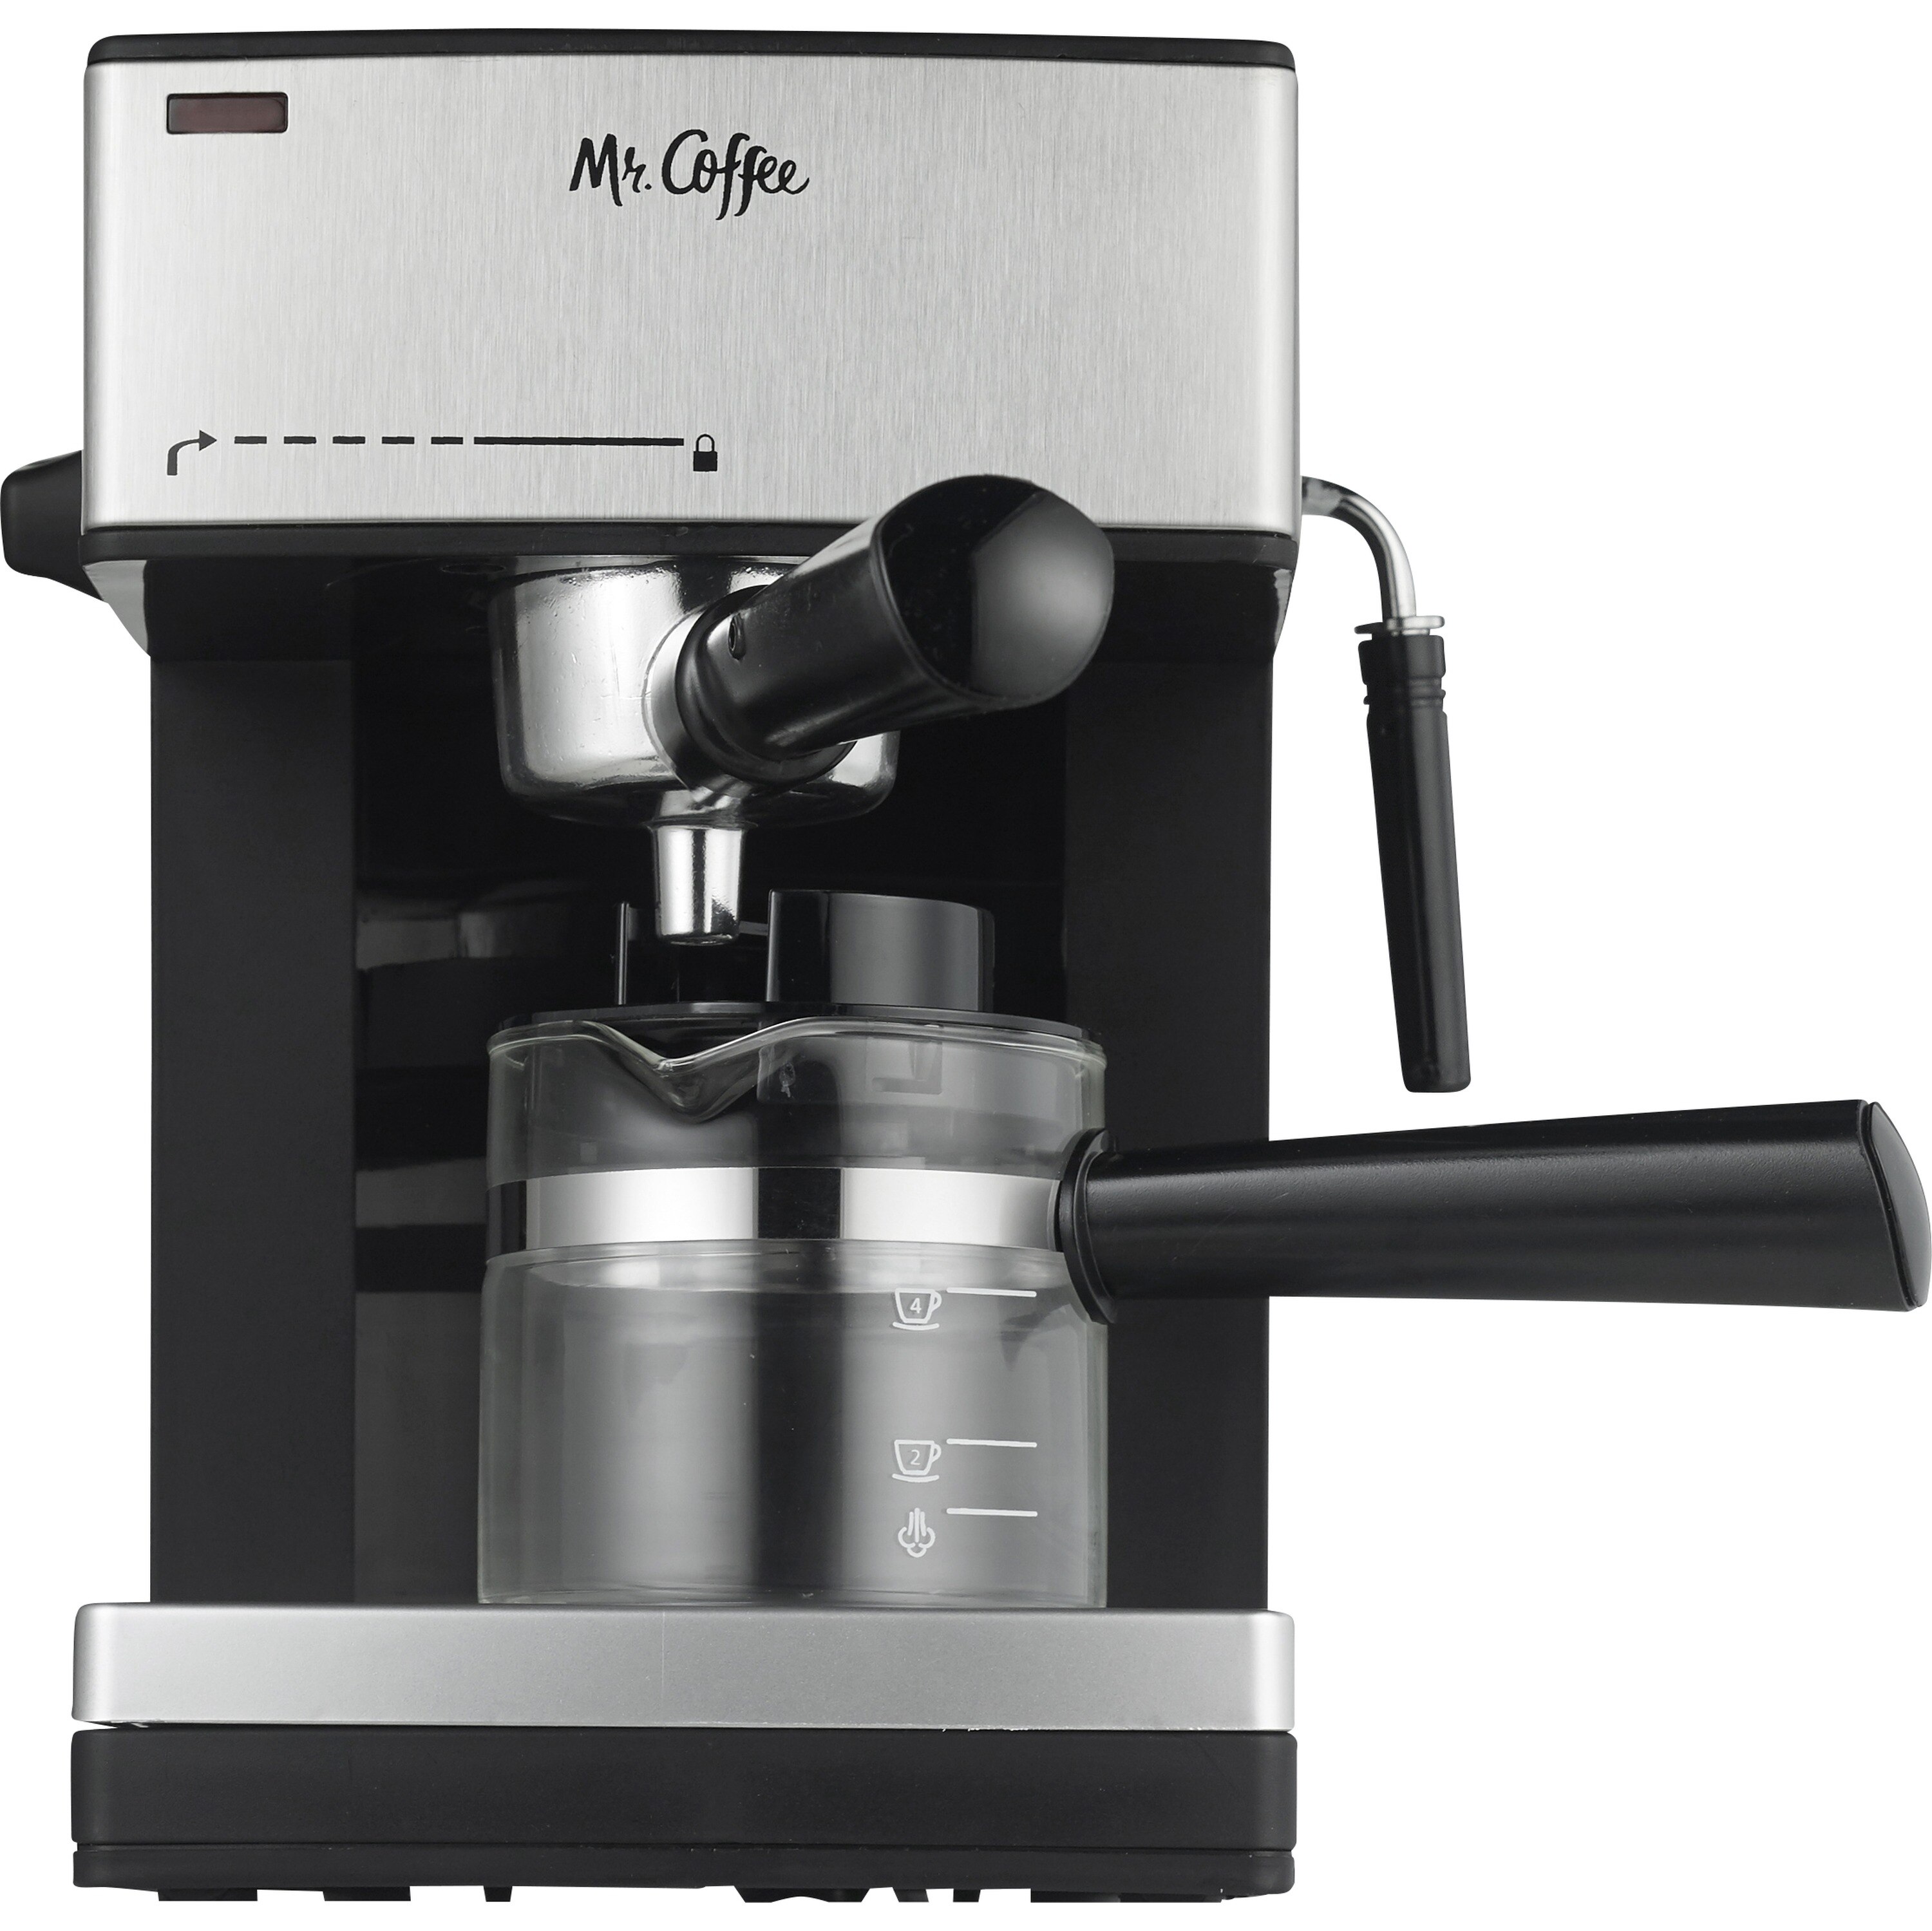 Oster Mr. Coffee Cappuccino And Espresso Maker Steam Pressure System, 4 Cup , CVS